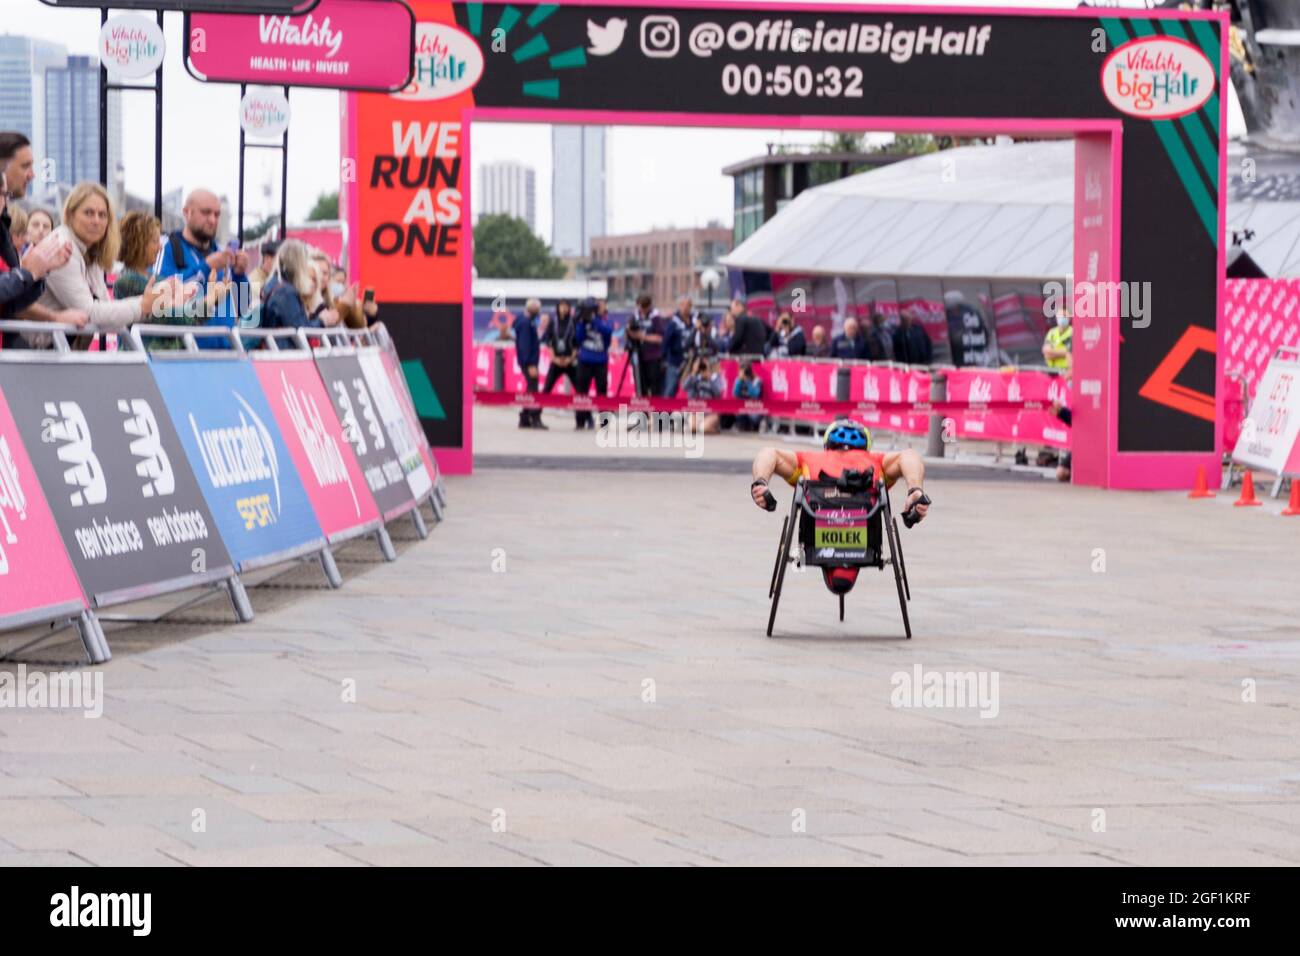 Sam Kolek elite wheelchair racer about to pass the finishing line at Cutty Sark in Big Half Marathon London UK 2021 Stock Photo